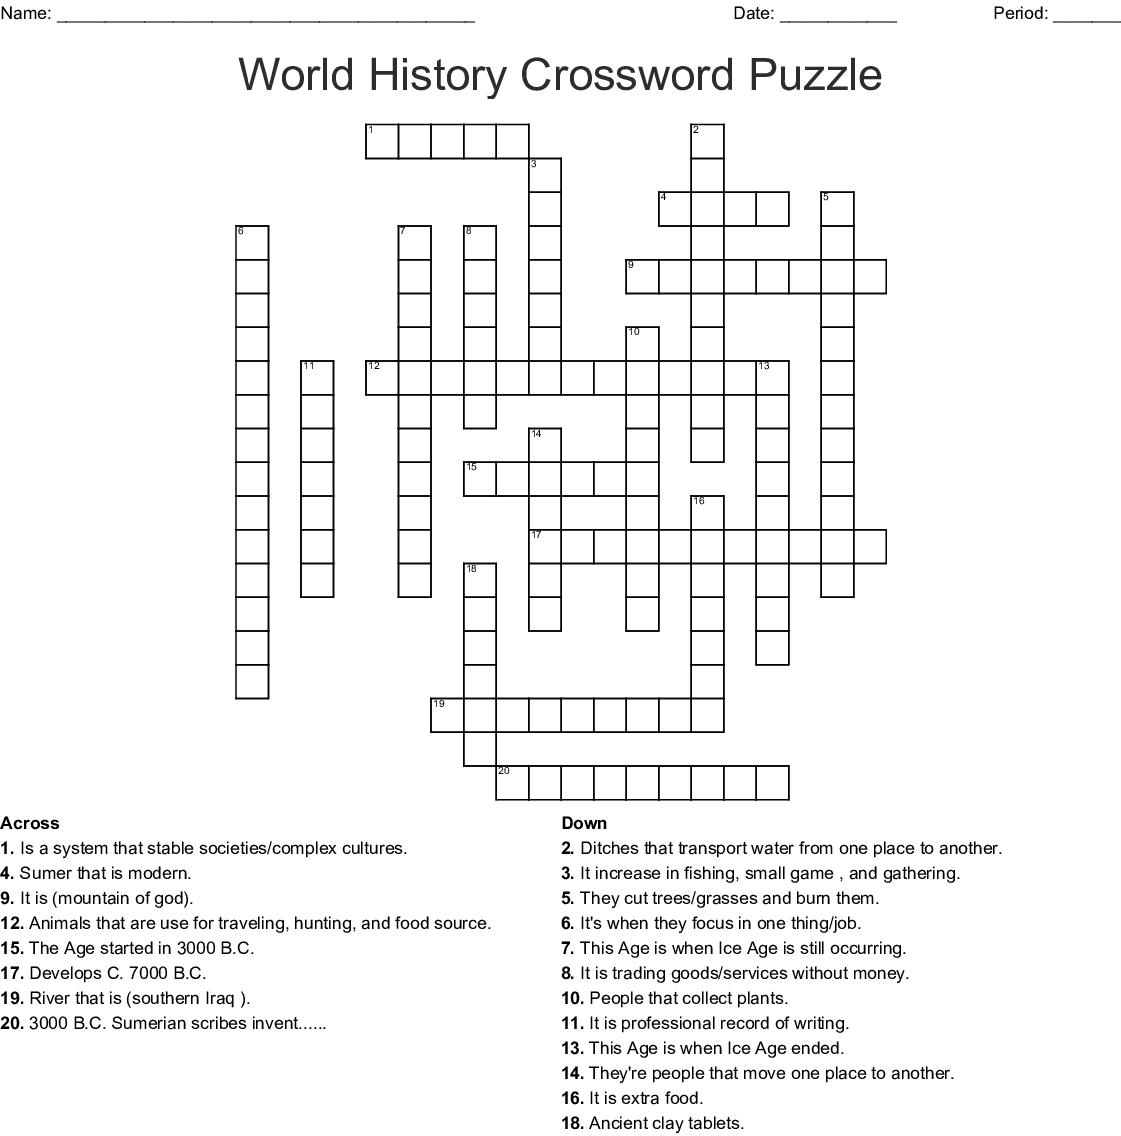 Free Black History Crossword Puzzles Printable